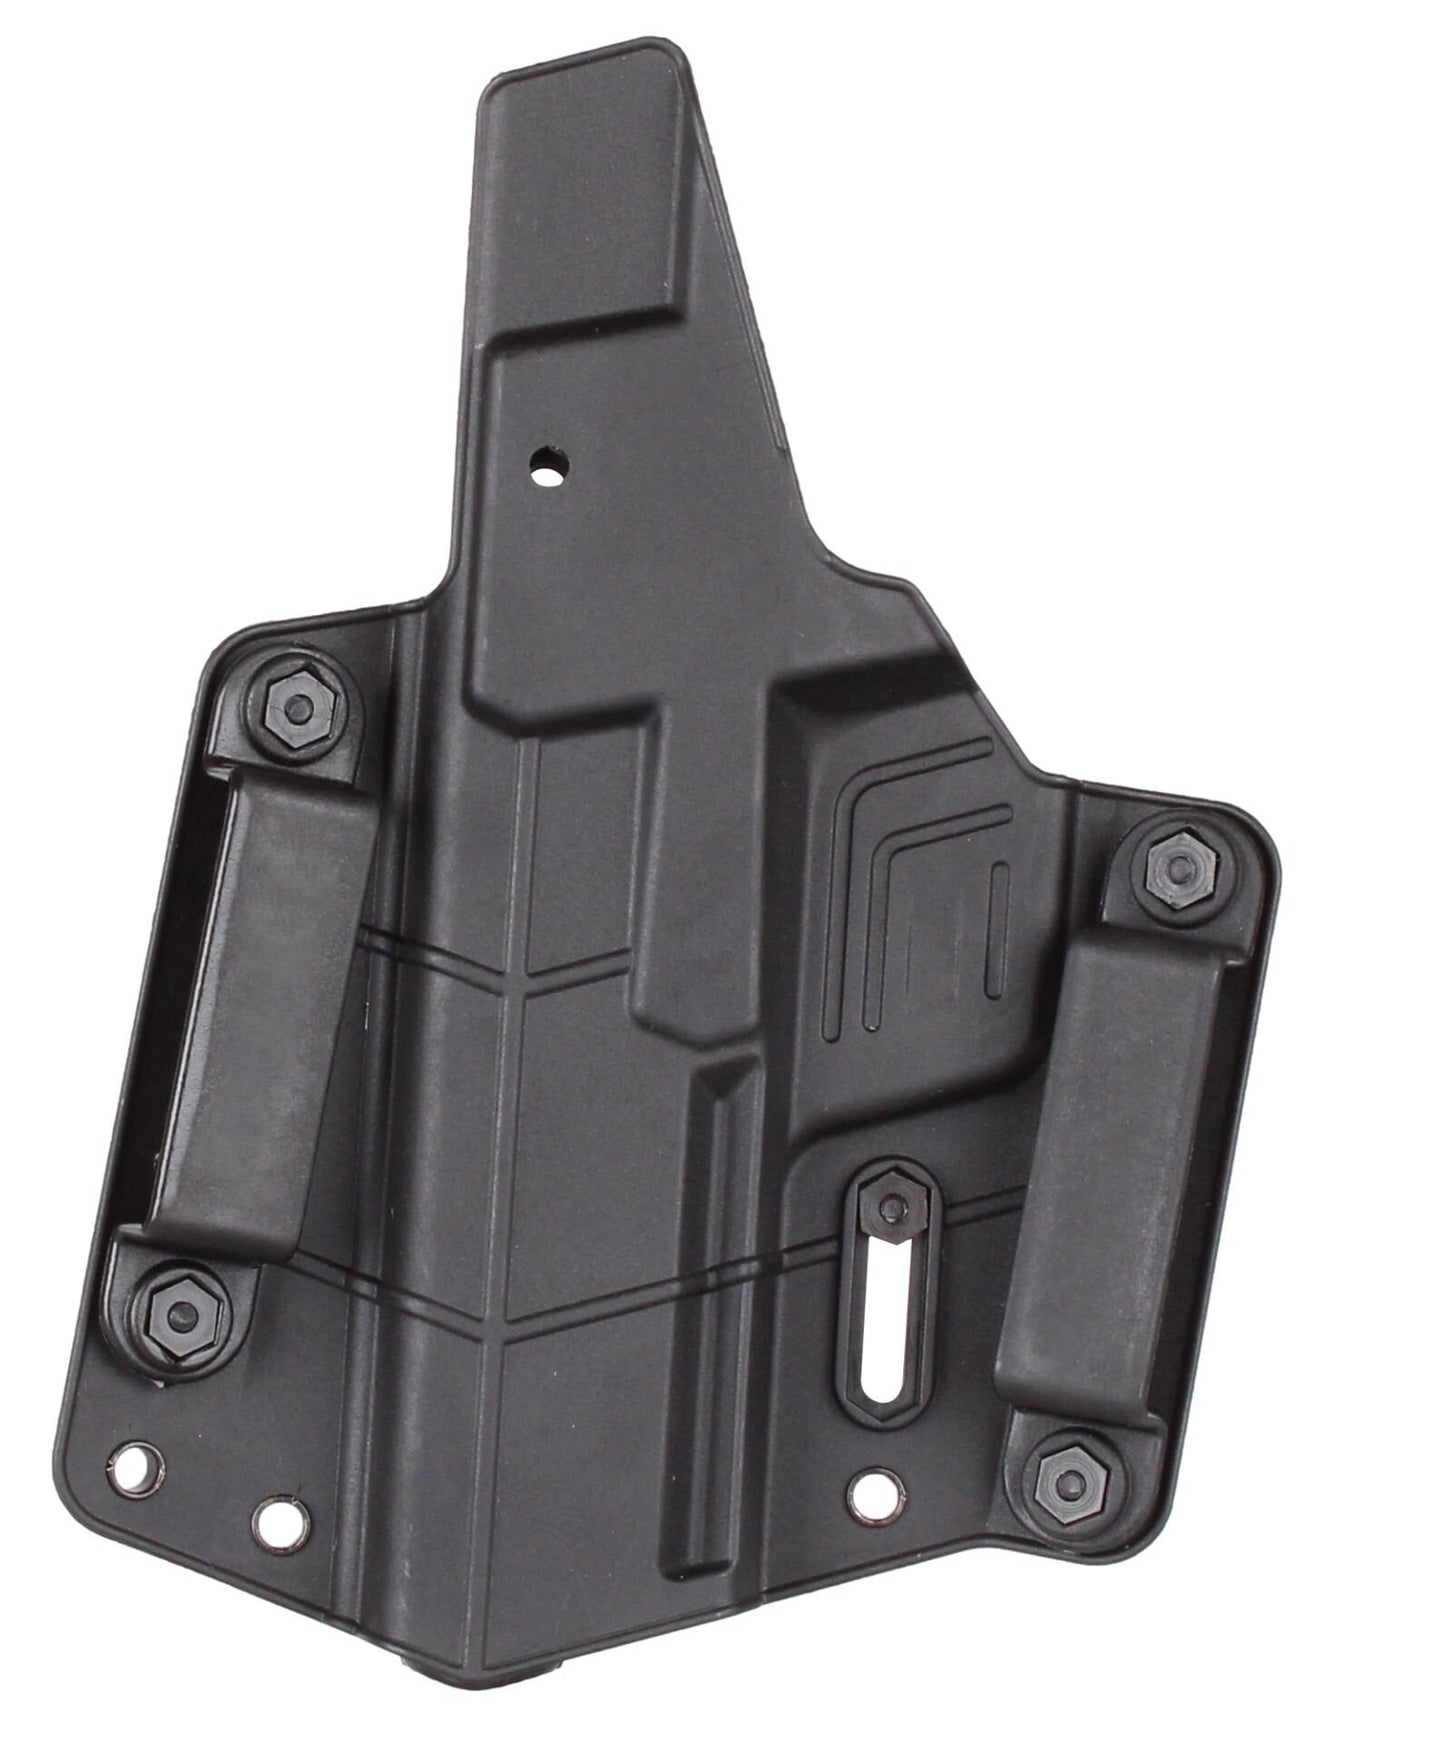 Polimer Series Closed System Locked Level I Gun Case - Original Design, Durable Polymer Material Compatible with Sar9, Sar9 Mete, Sar9 C, Sar9 Gen2, Sar9 CX